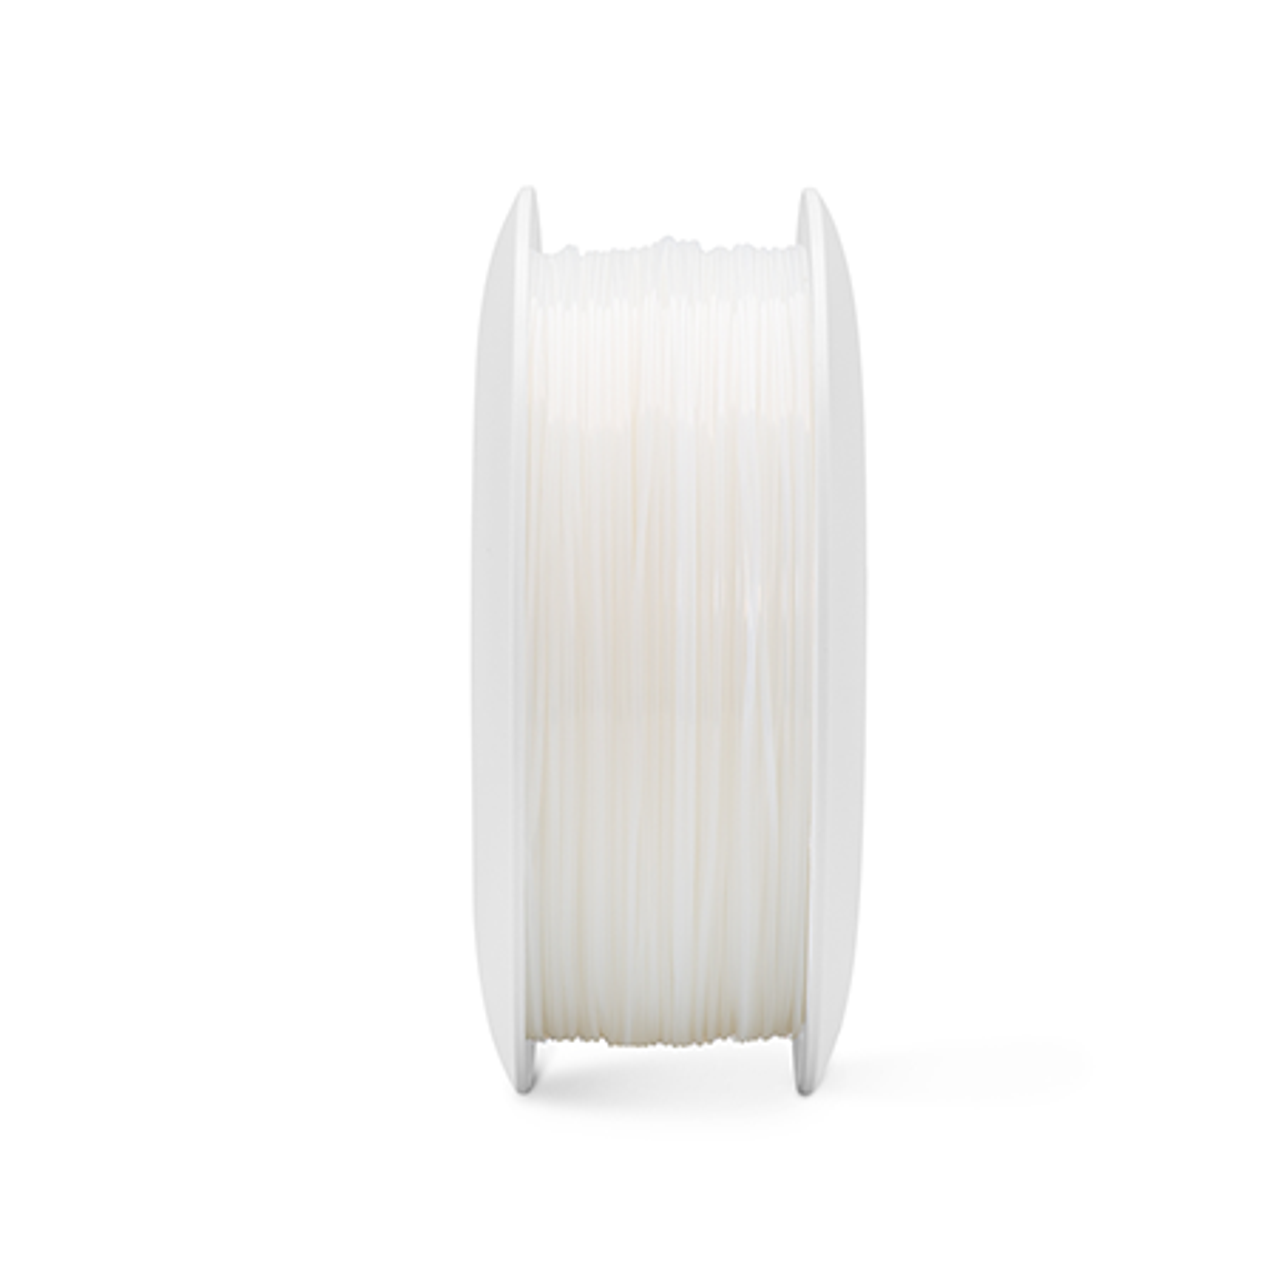 Fiberlogy Nylon PA12 Natural 3D Printing Filament